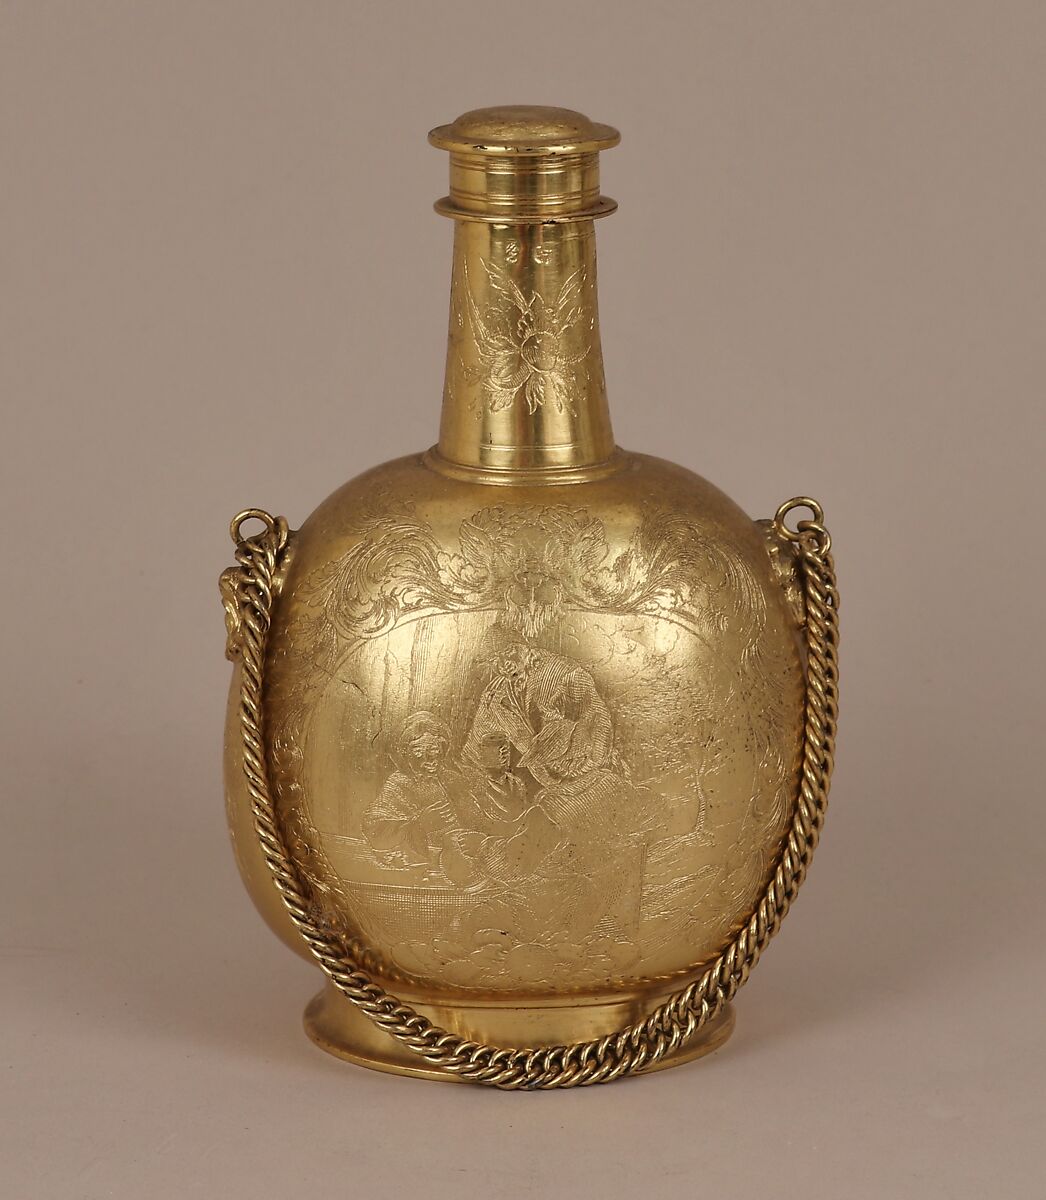 Flask, Silver on base metal, British, after German, Augsburg original 